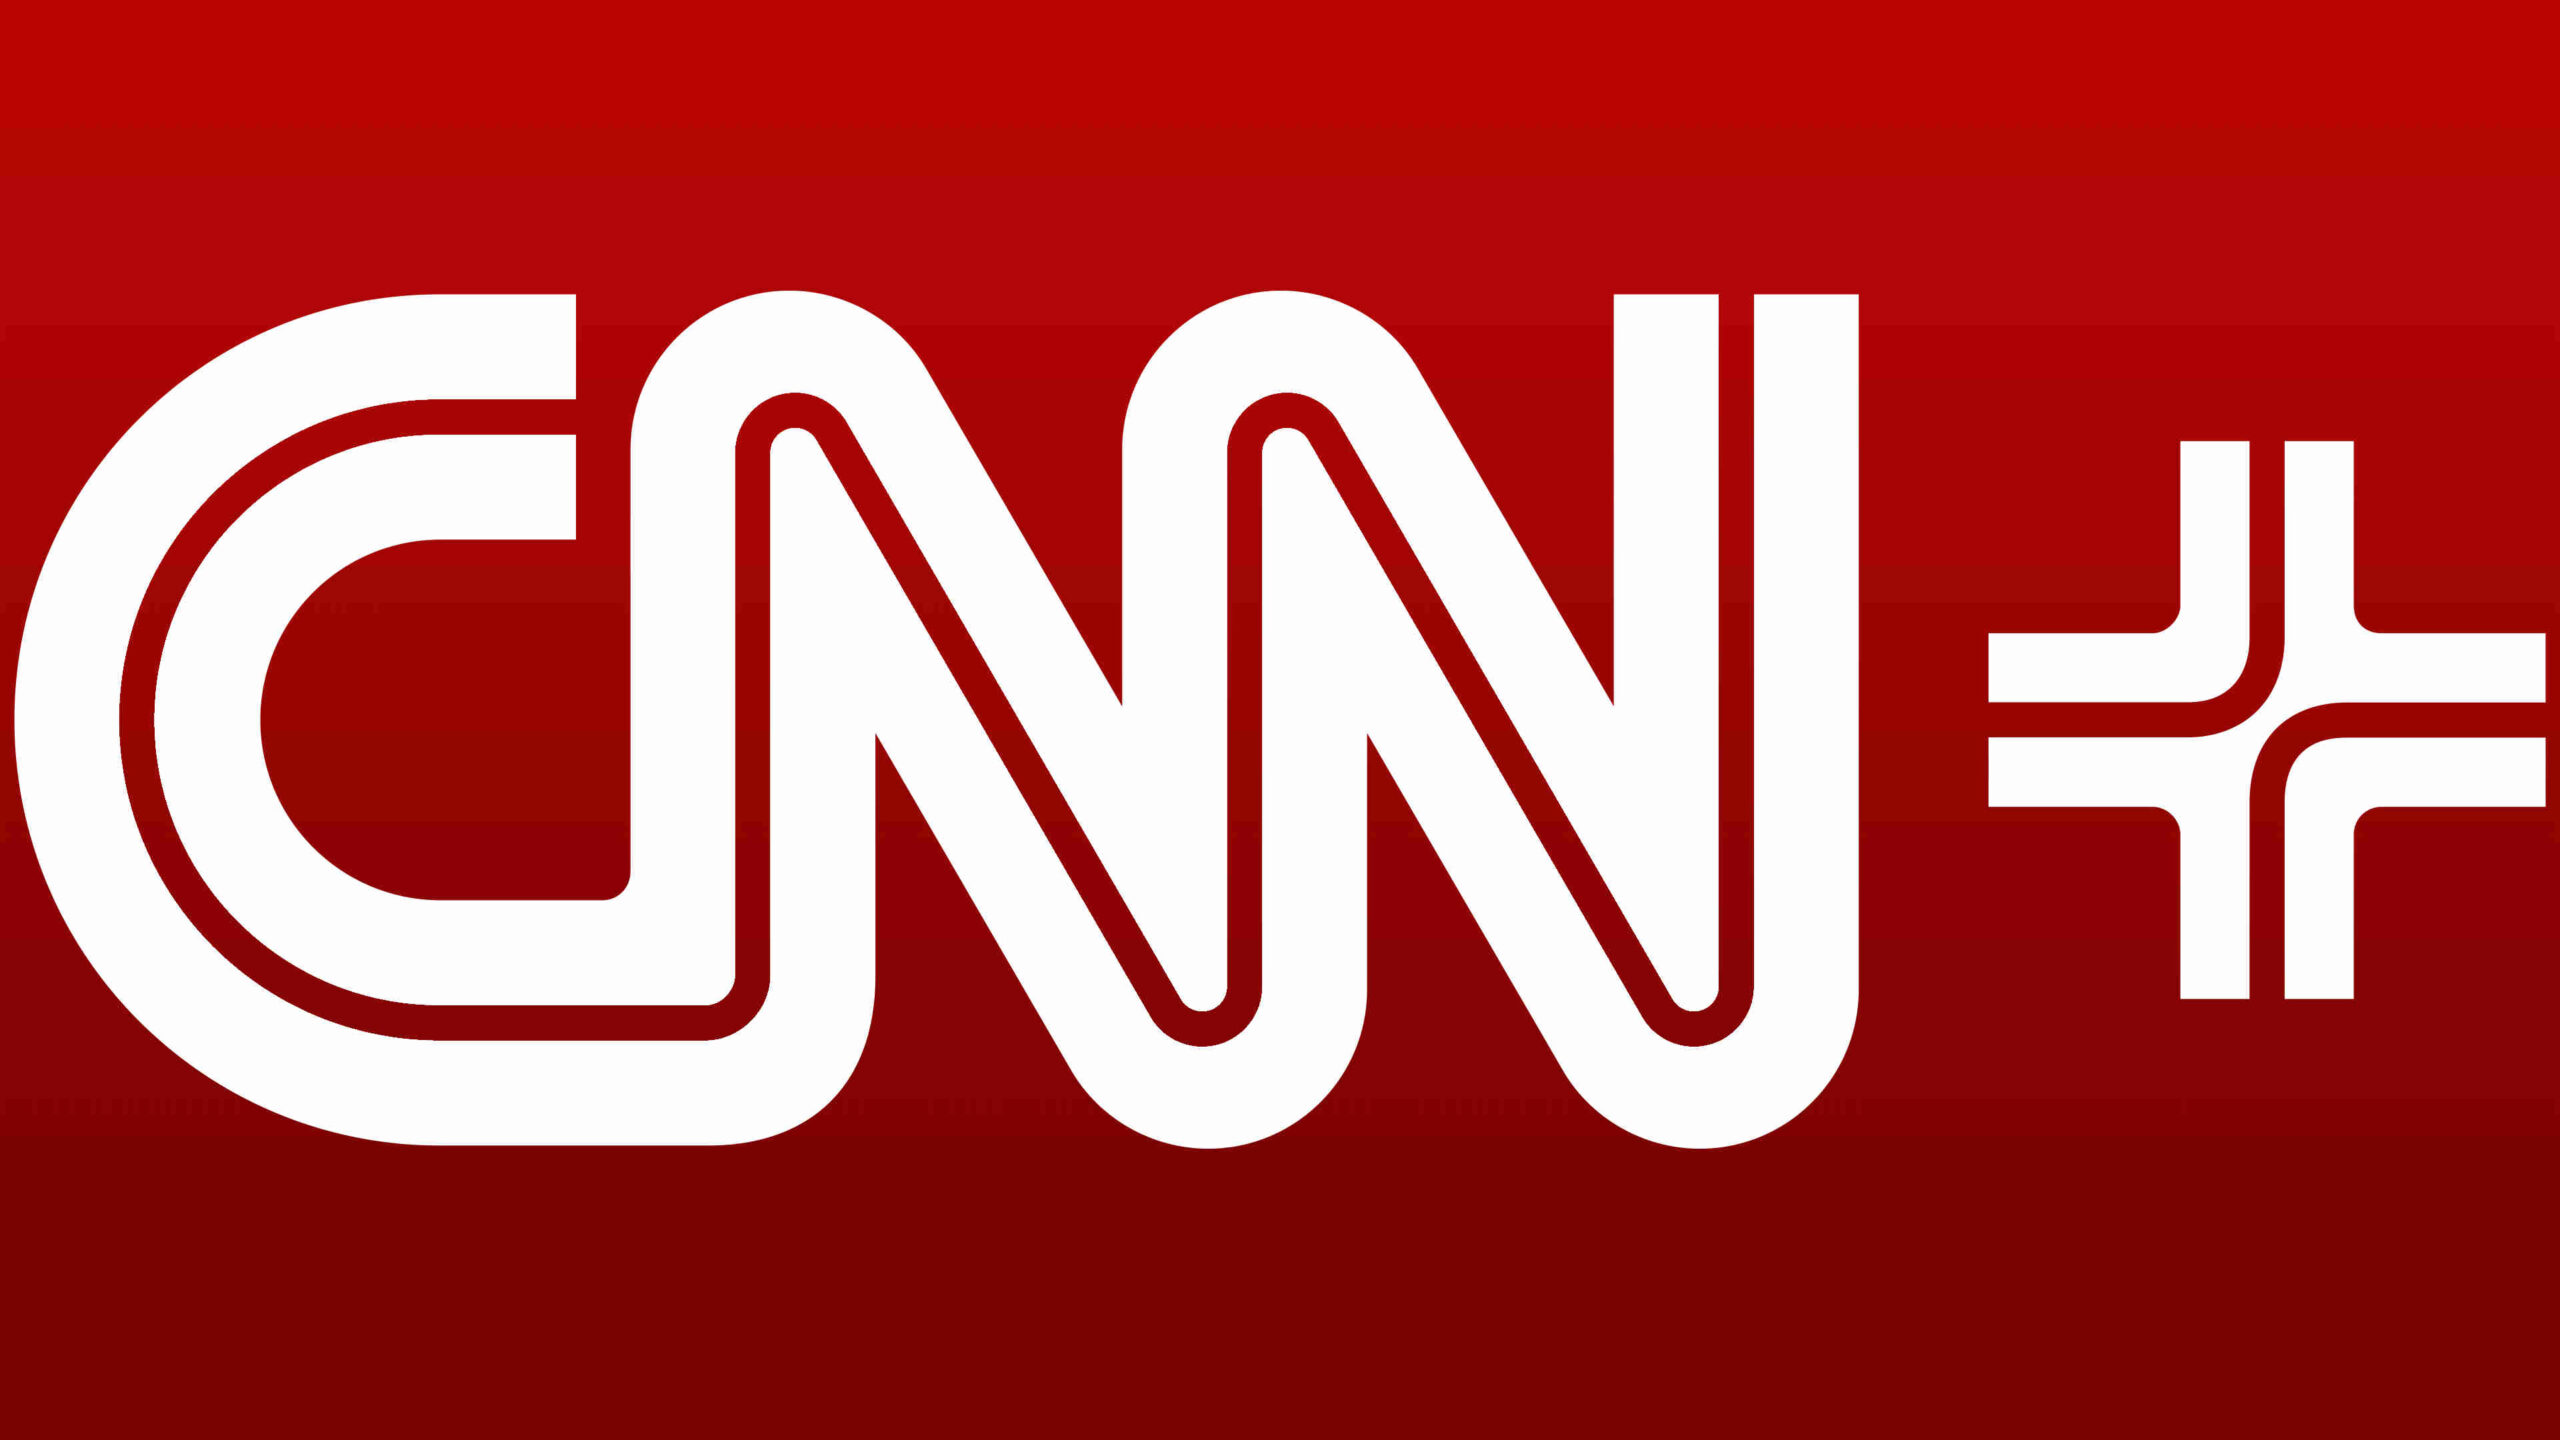 CNN+ news